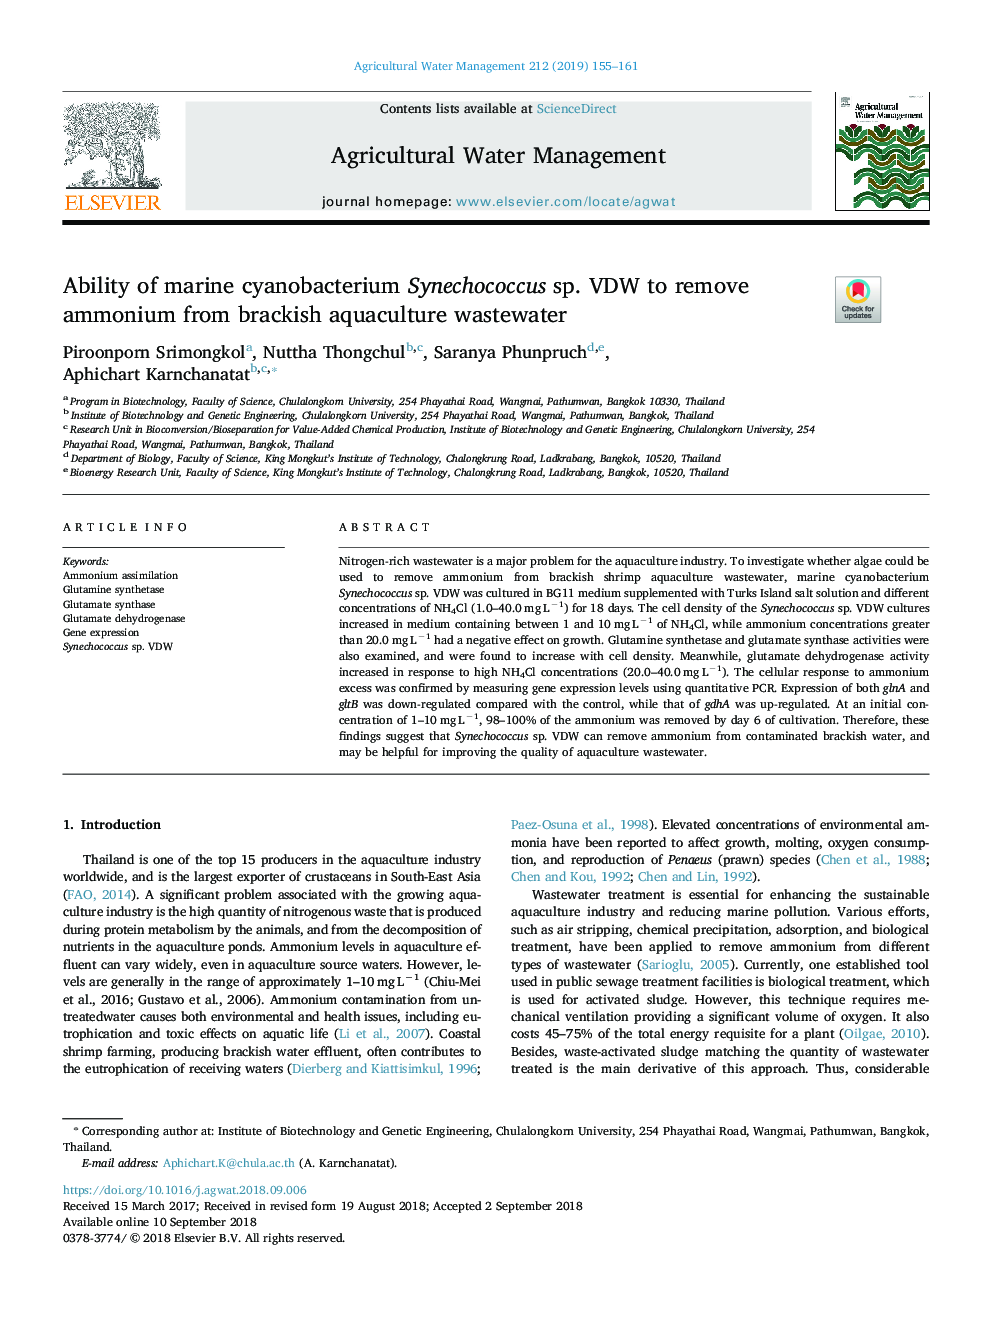 Ability of marine cyanobacterium Synechococcus sp. VDW to remove ammonium from brackish aquaculture wastewater